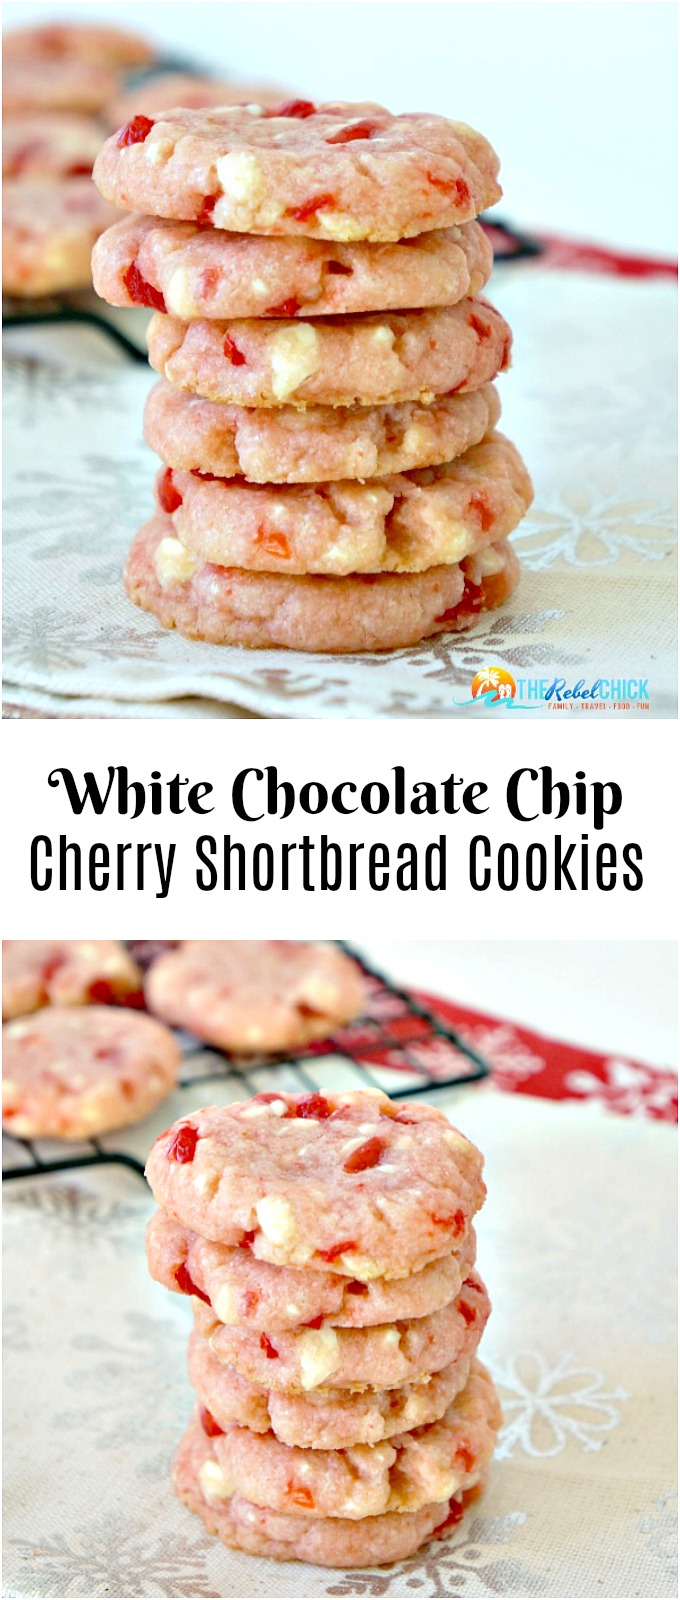 White Chocolate Chip Cherry Shortbread Cookies Recipe